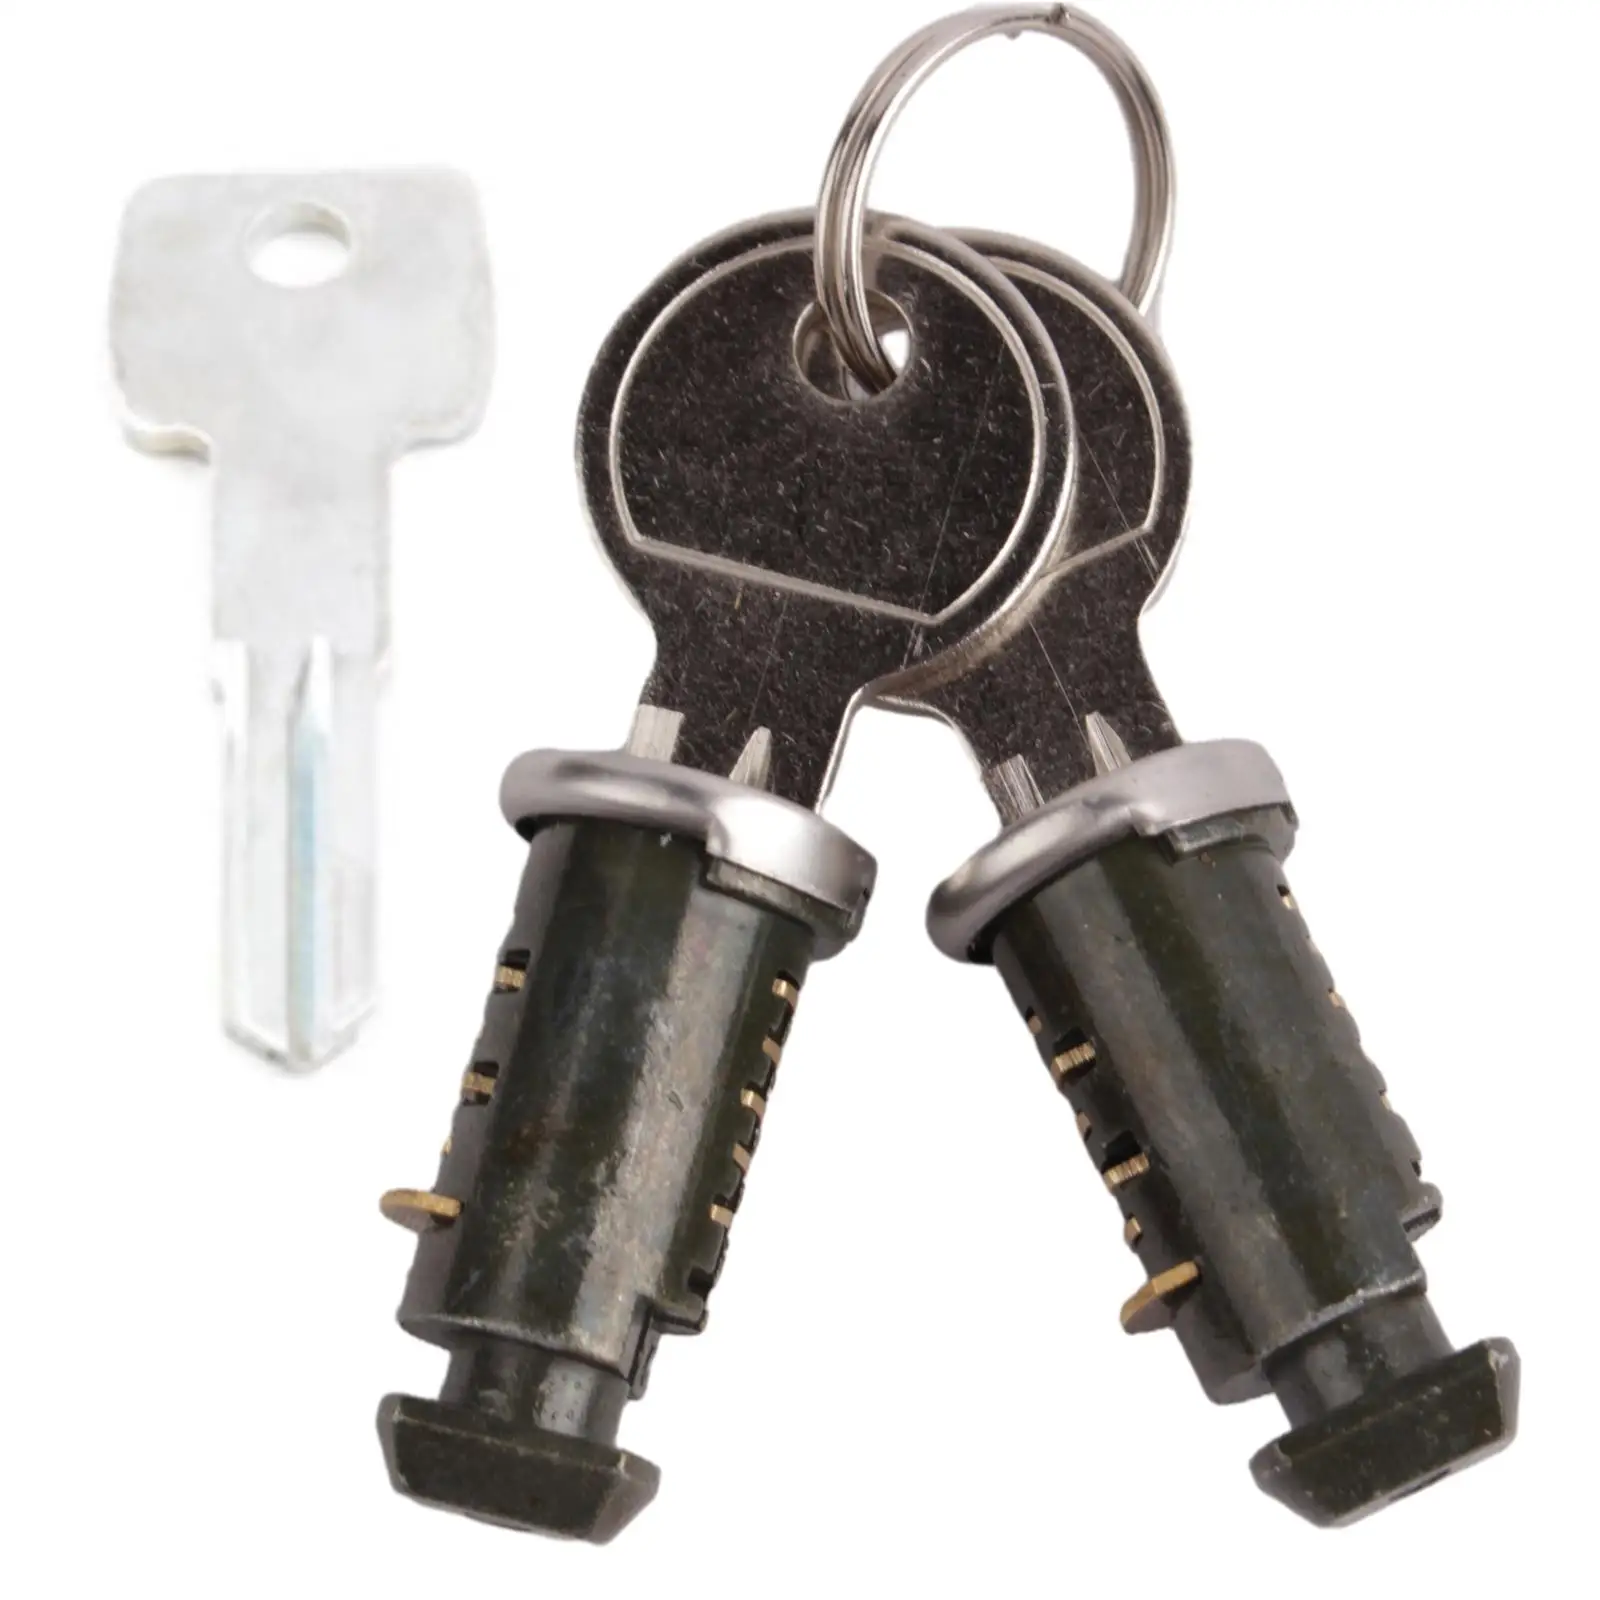 Lock Cylindes Professional Car Rack Parts Detachable Locks Keys Accessories Lock Core Roof Rack Kit for Car Rack Locks SUV